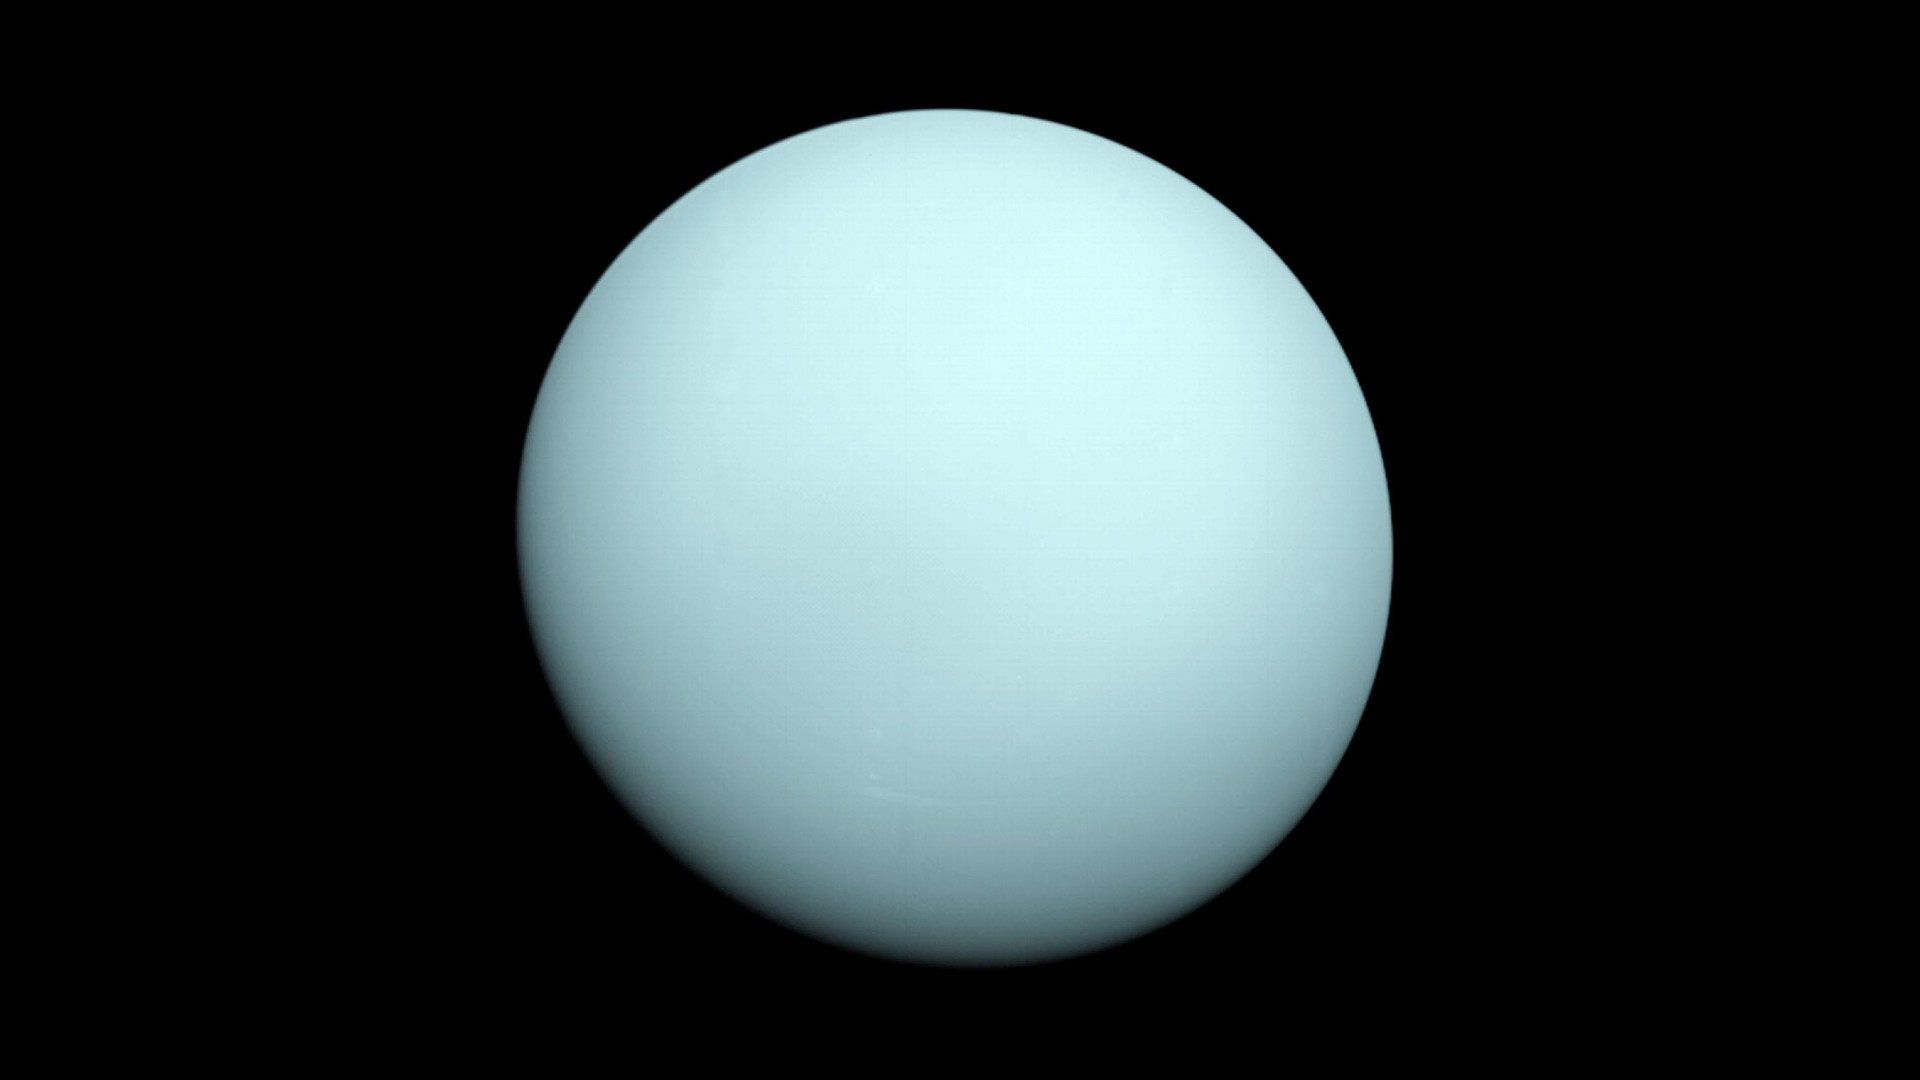 An image of Uranus taken by Voyager 2 on January 14, 1986.